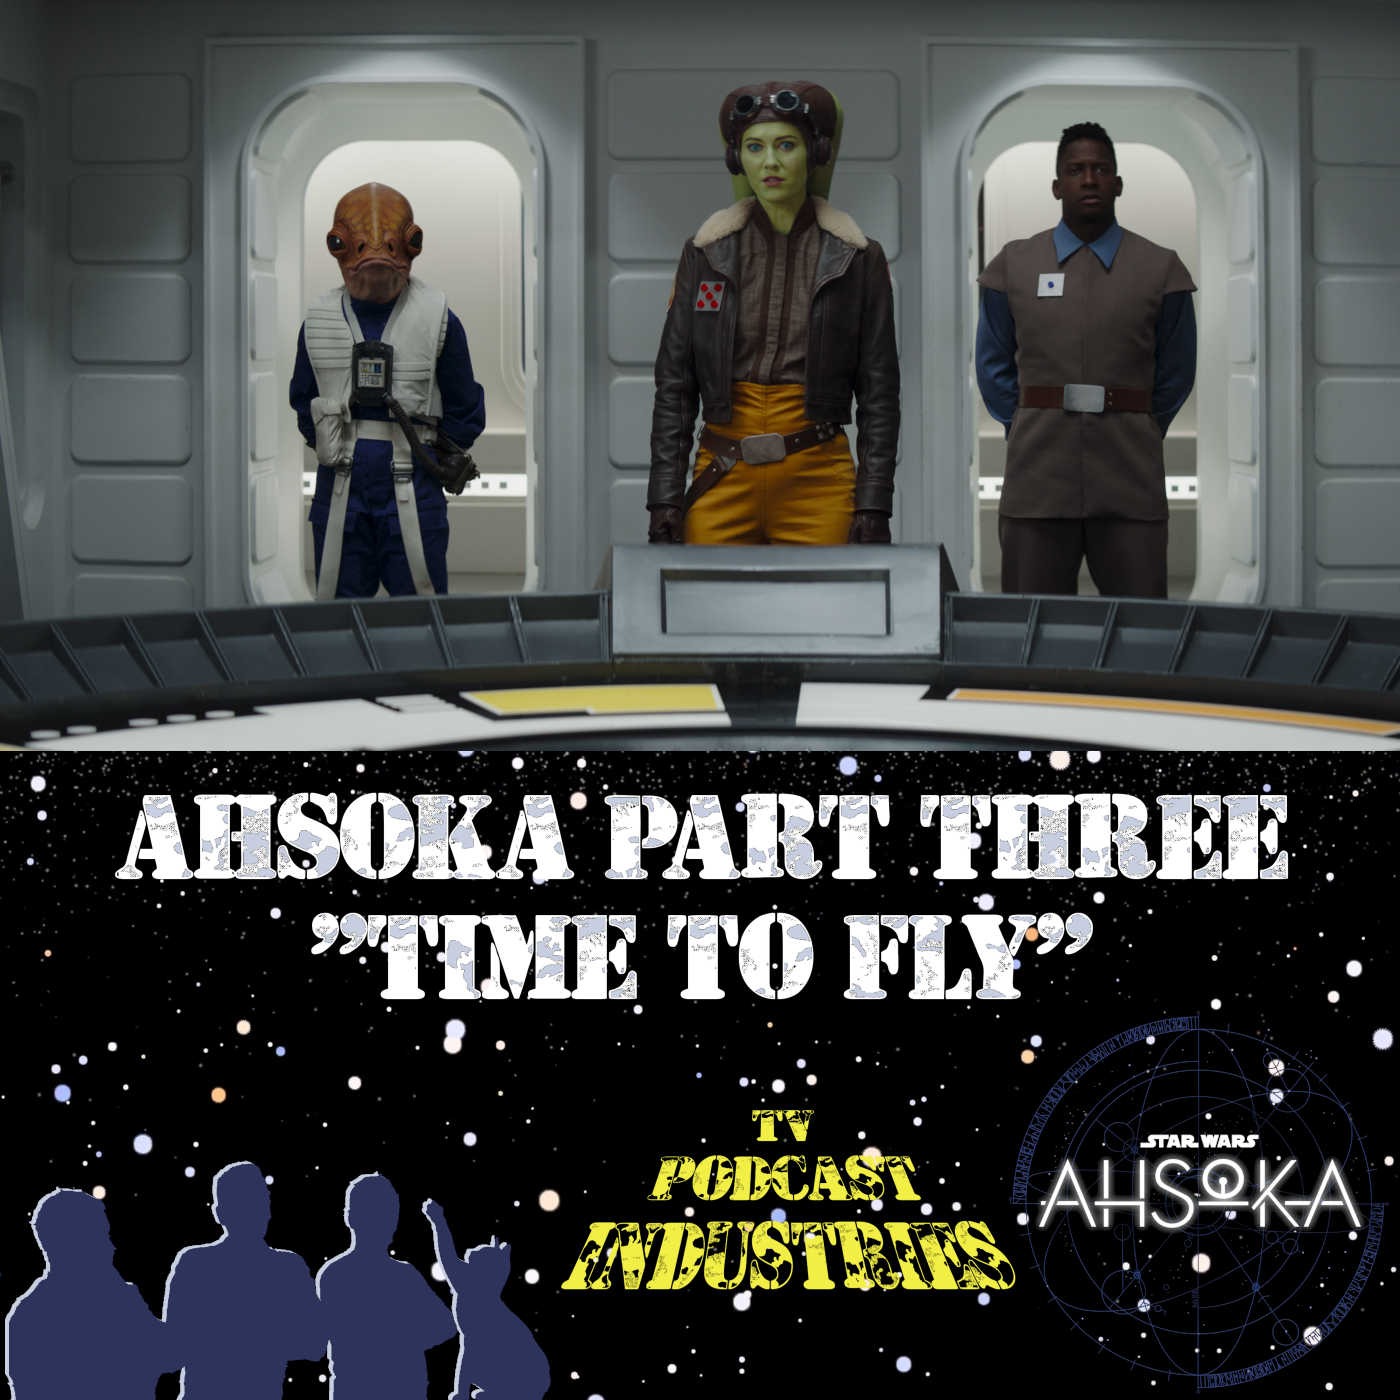 Ahsoka Part 3 "Time To Fly"